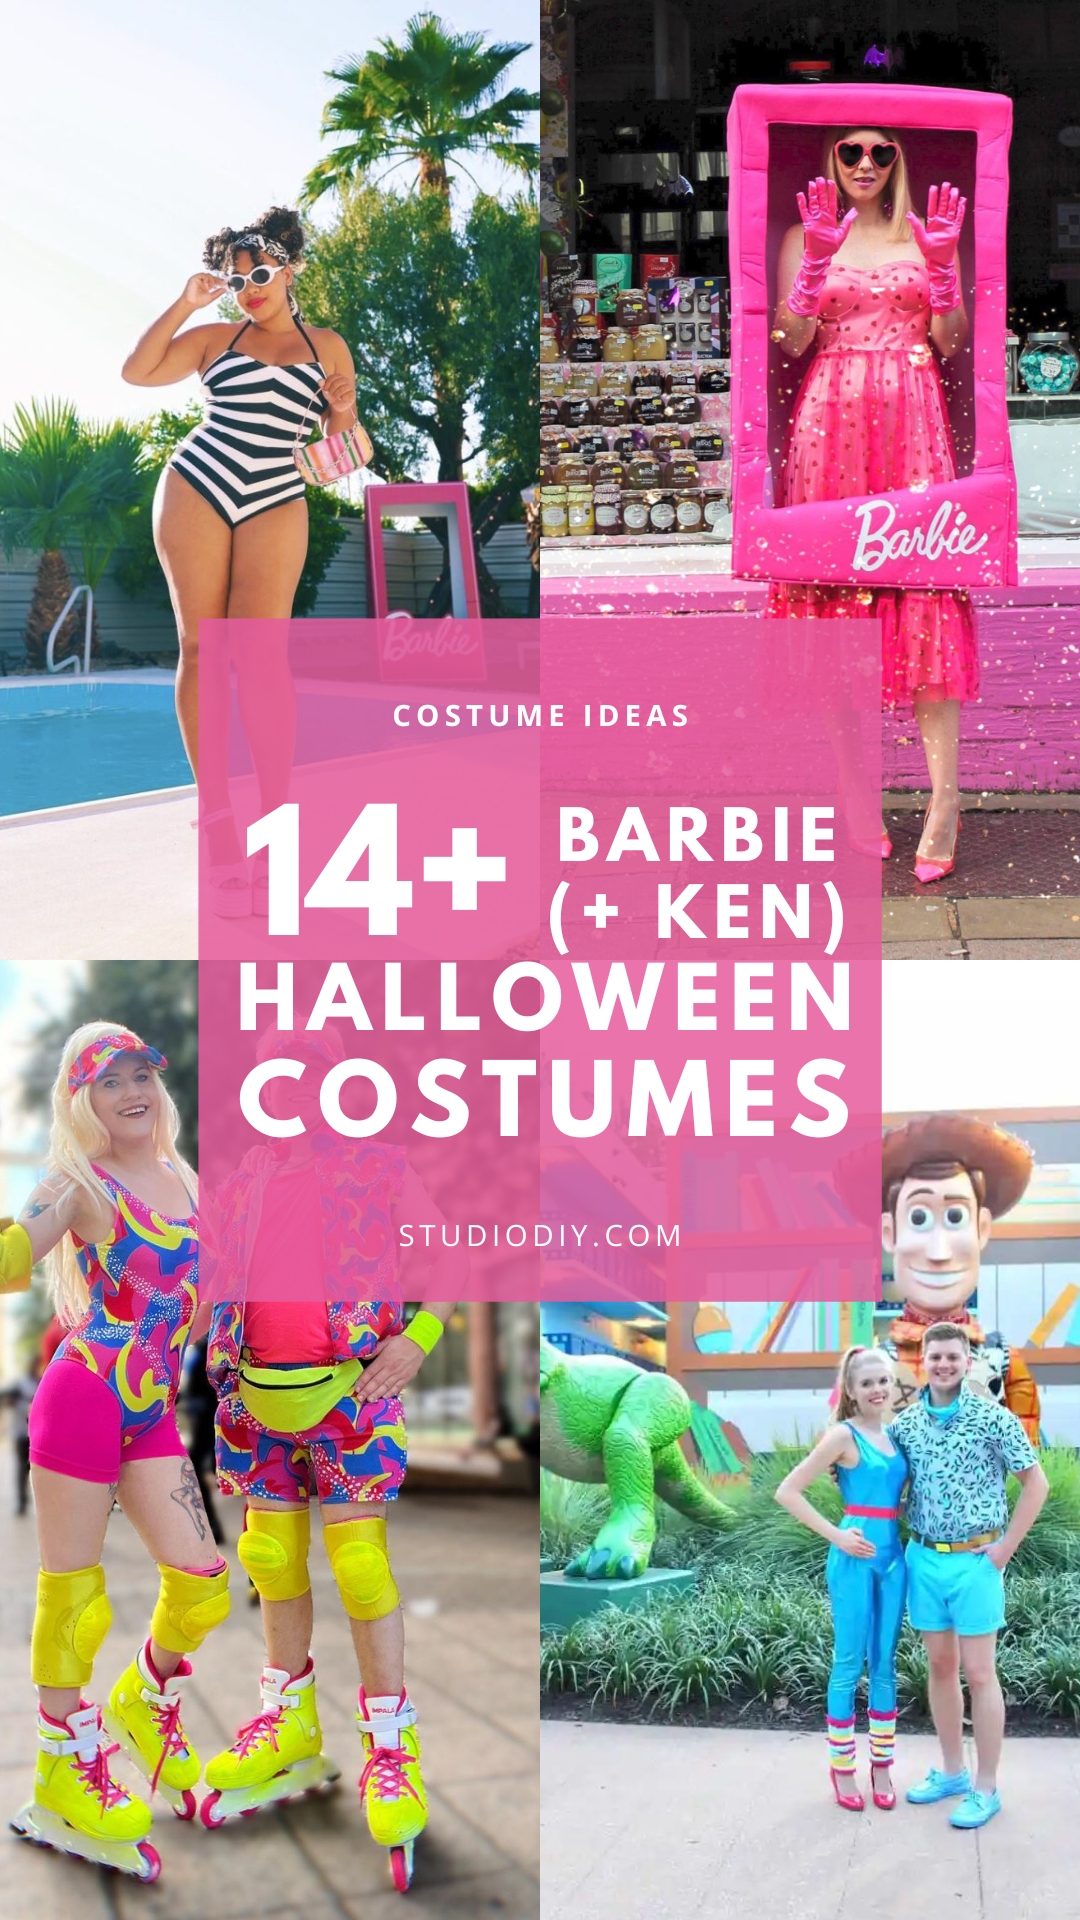 Barbie Costumes in Halloween Costumes 